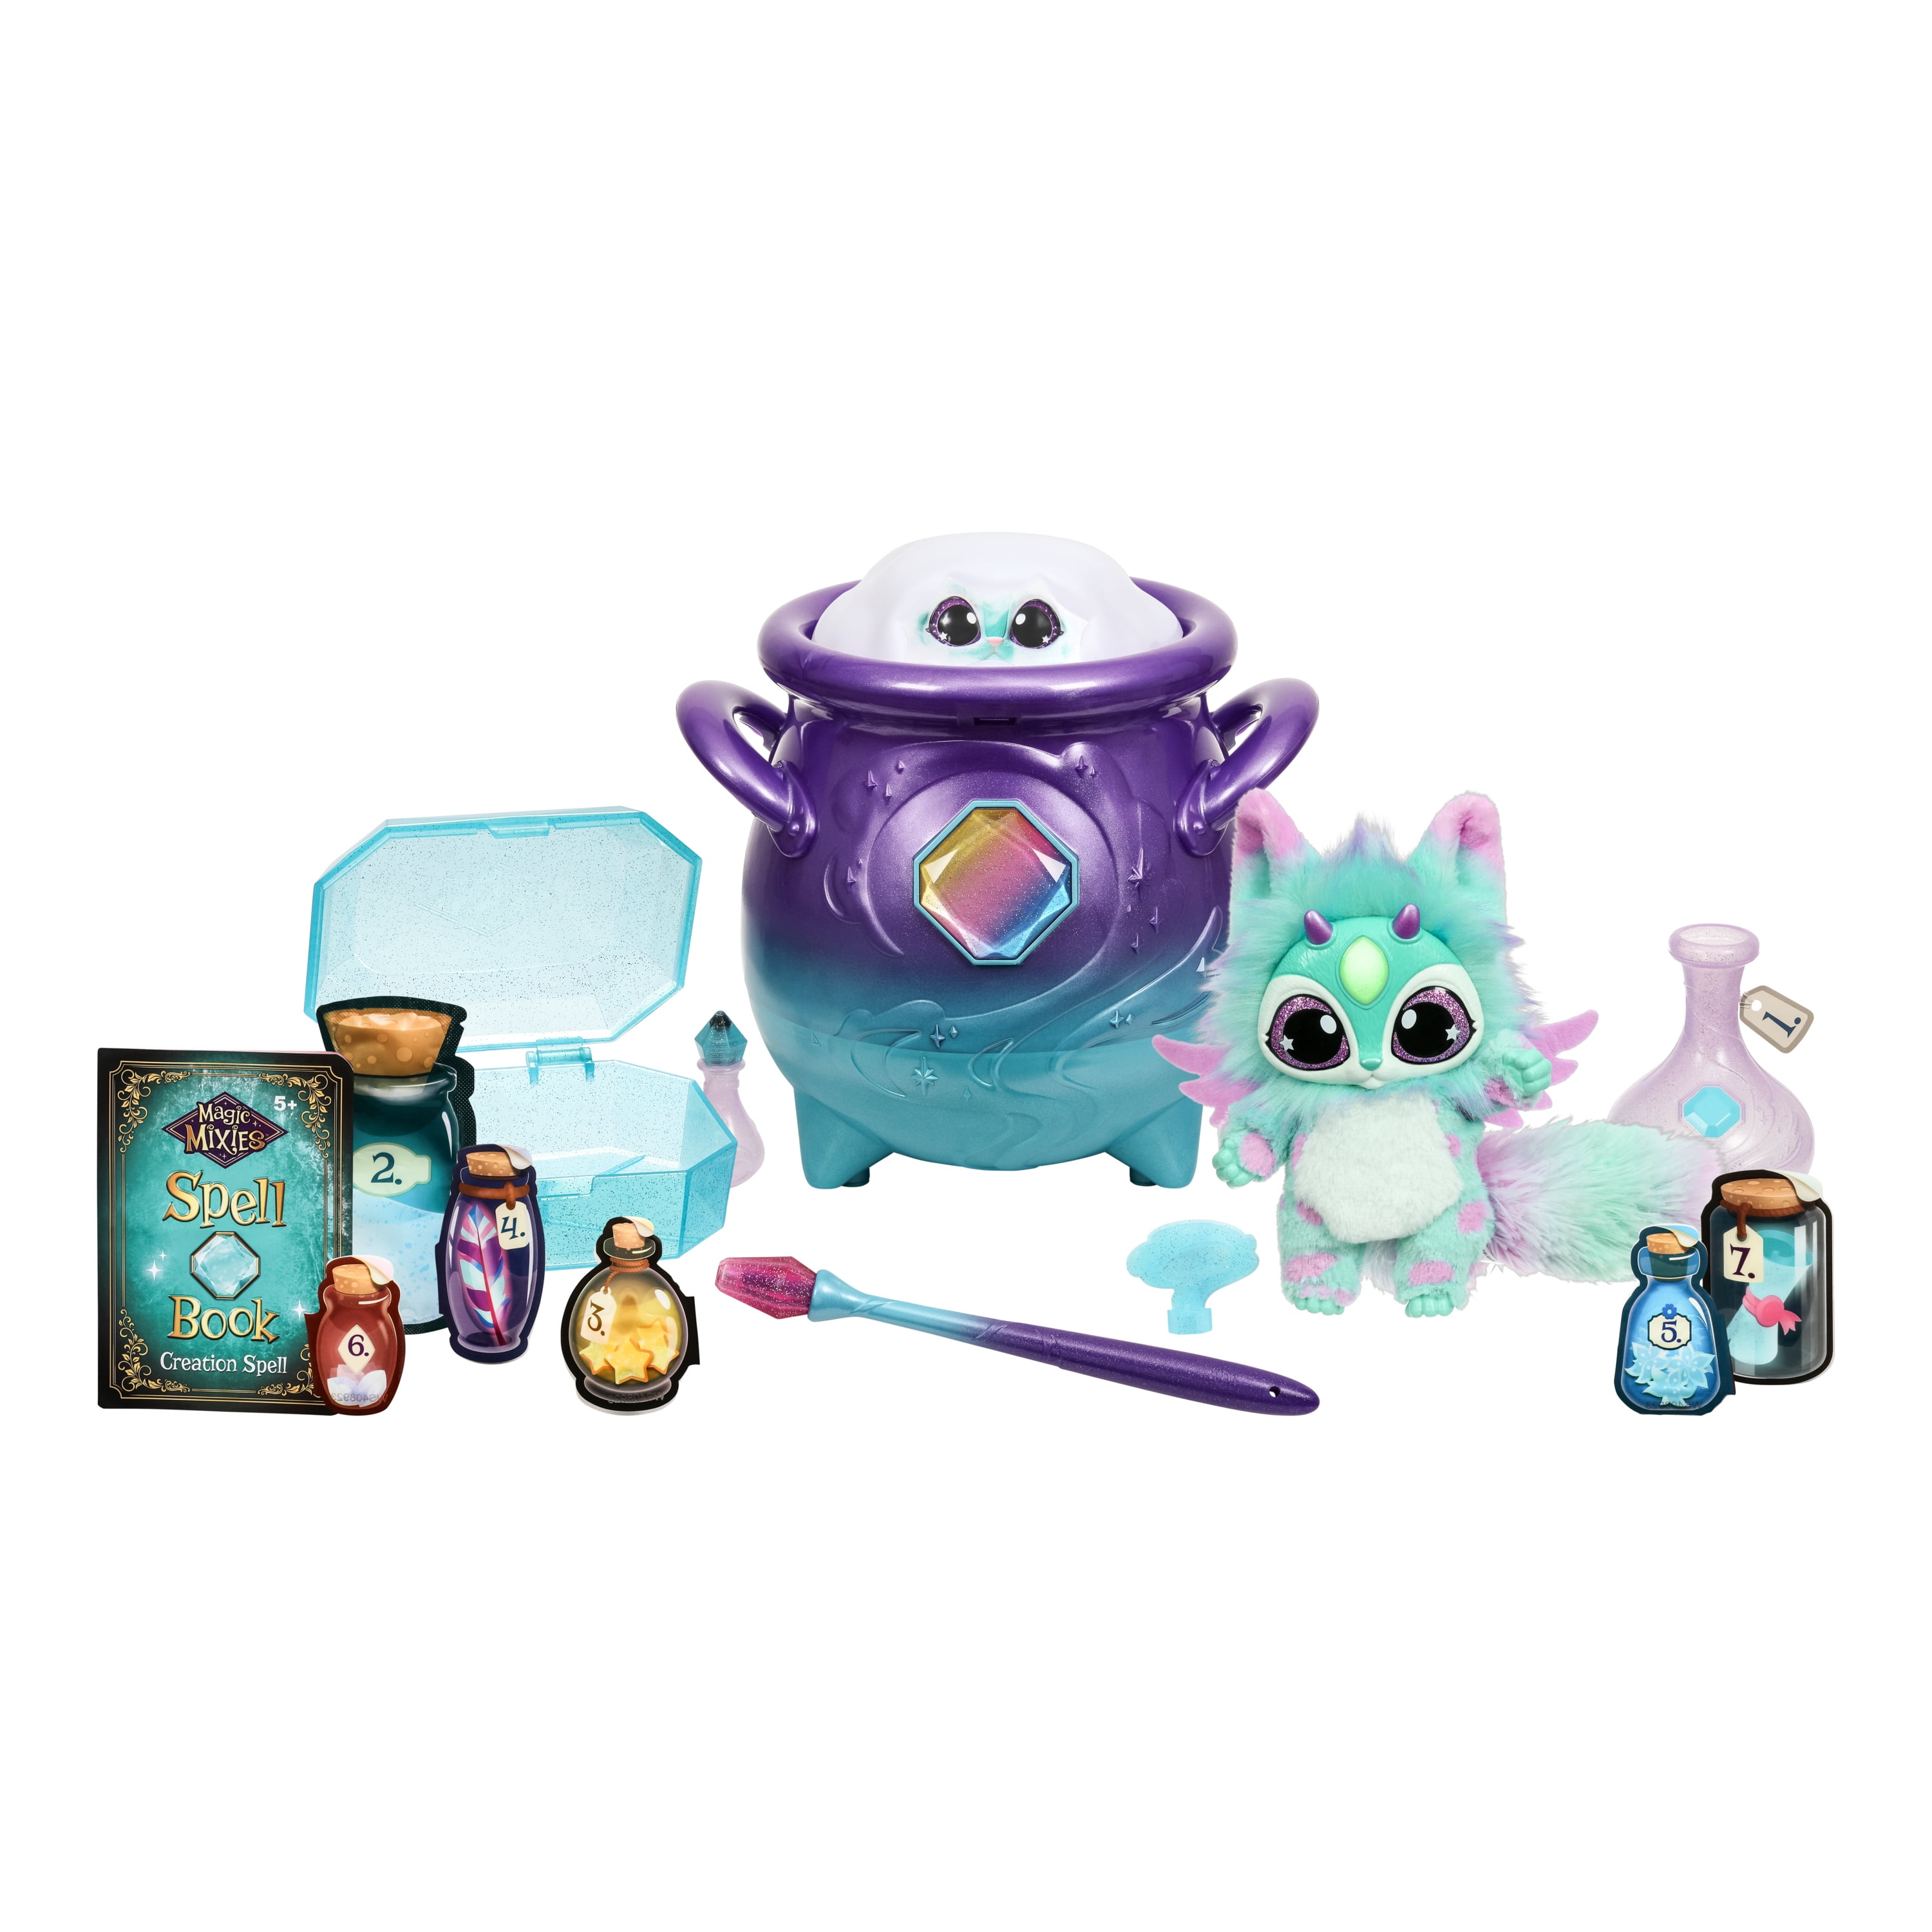 Magic Mixies Magical Real Misting Purple Cauldron with Interactive